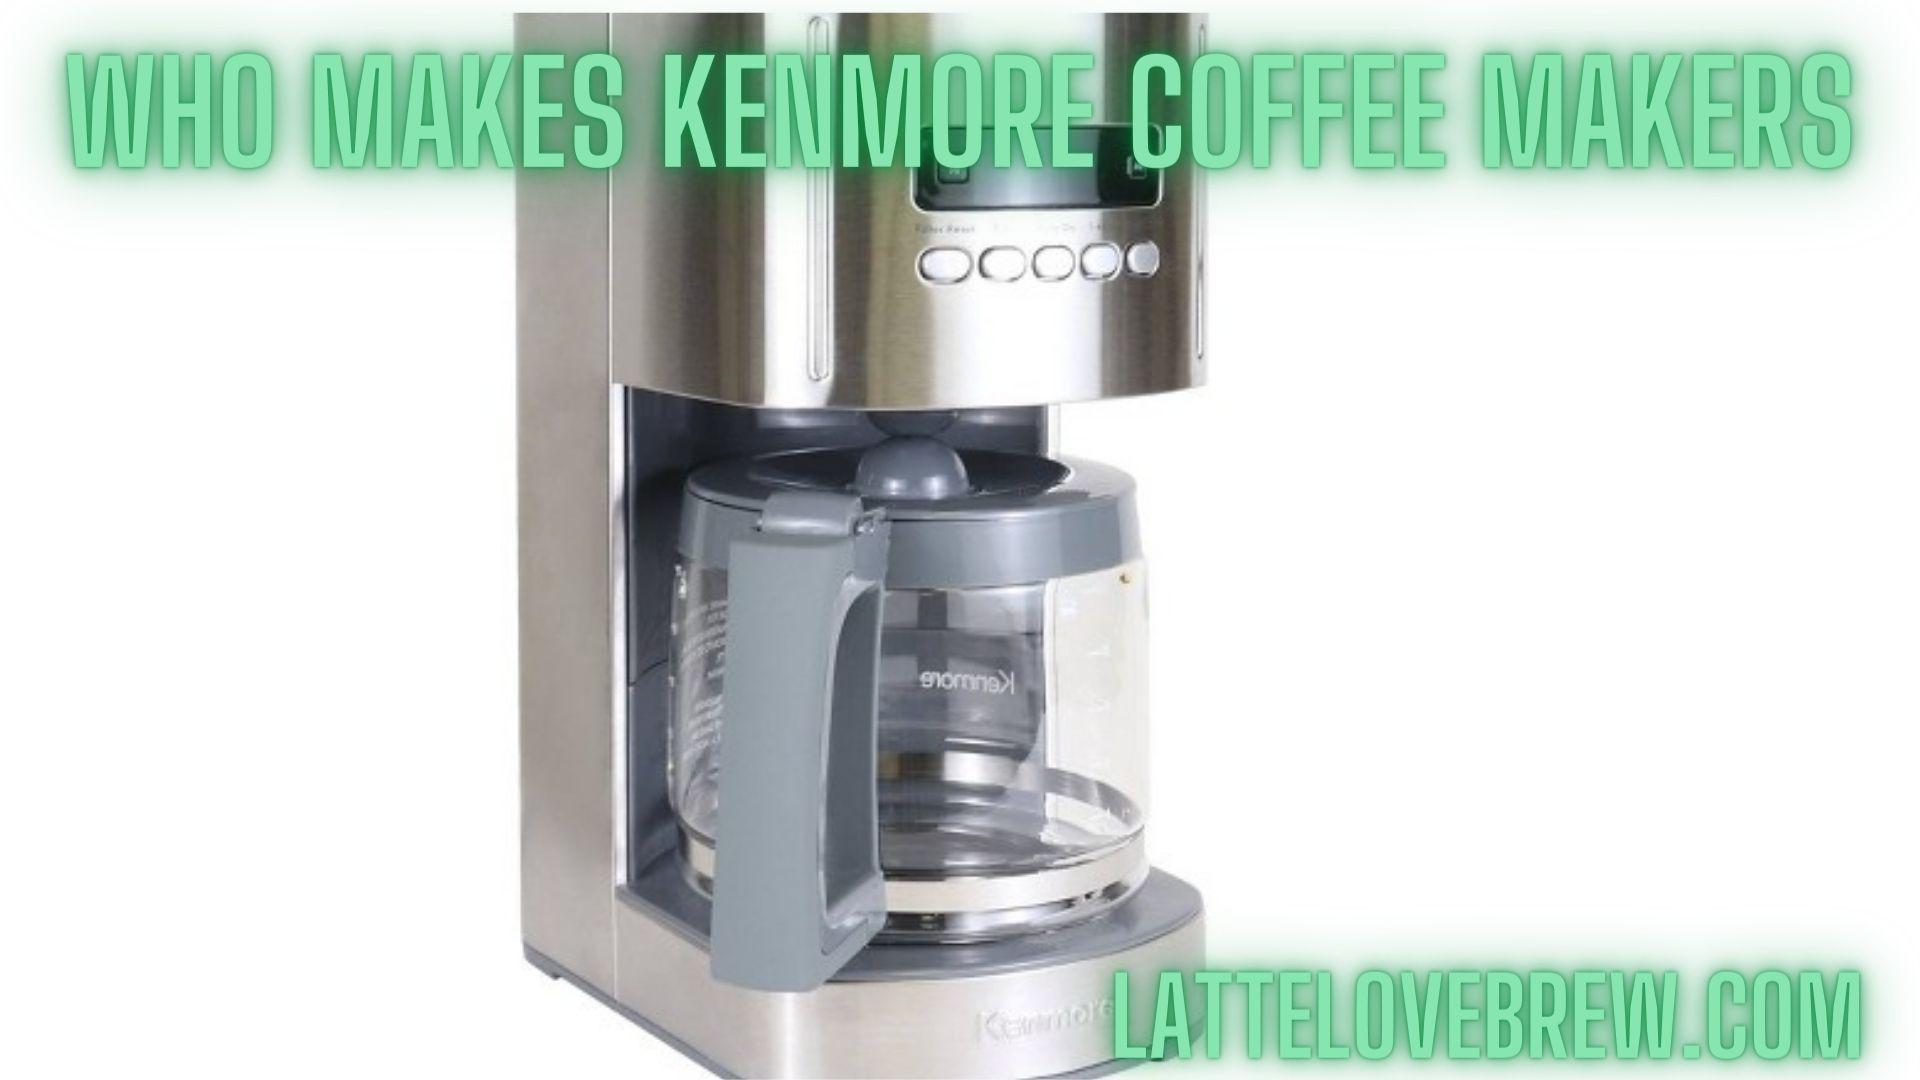 https://lattelovebrew.com/wp-content/uploads/2021/10/Who-Makes-Kenmore-Coffee-Makers.jpg